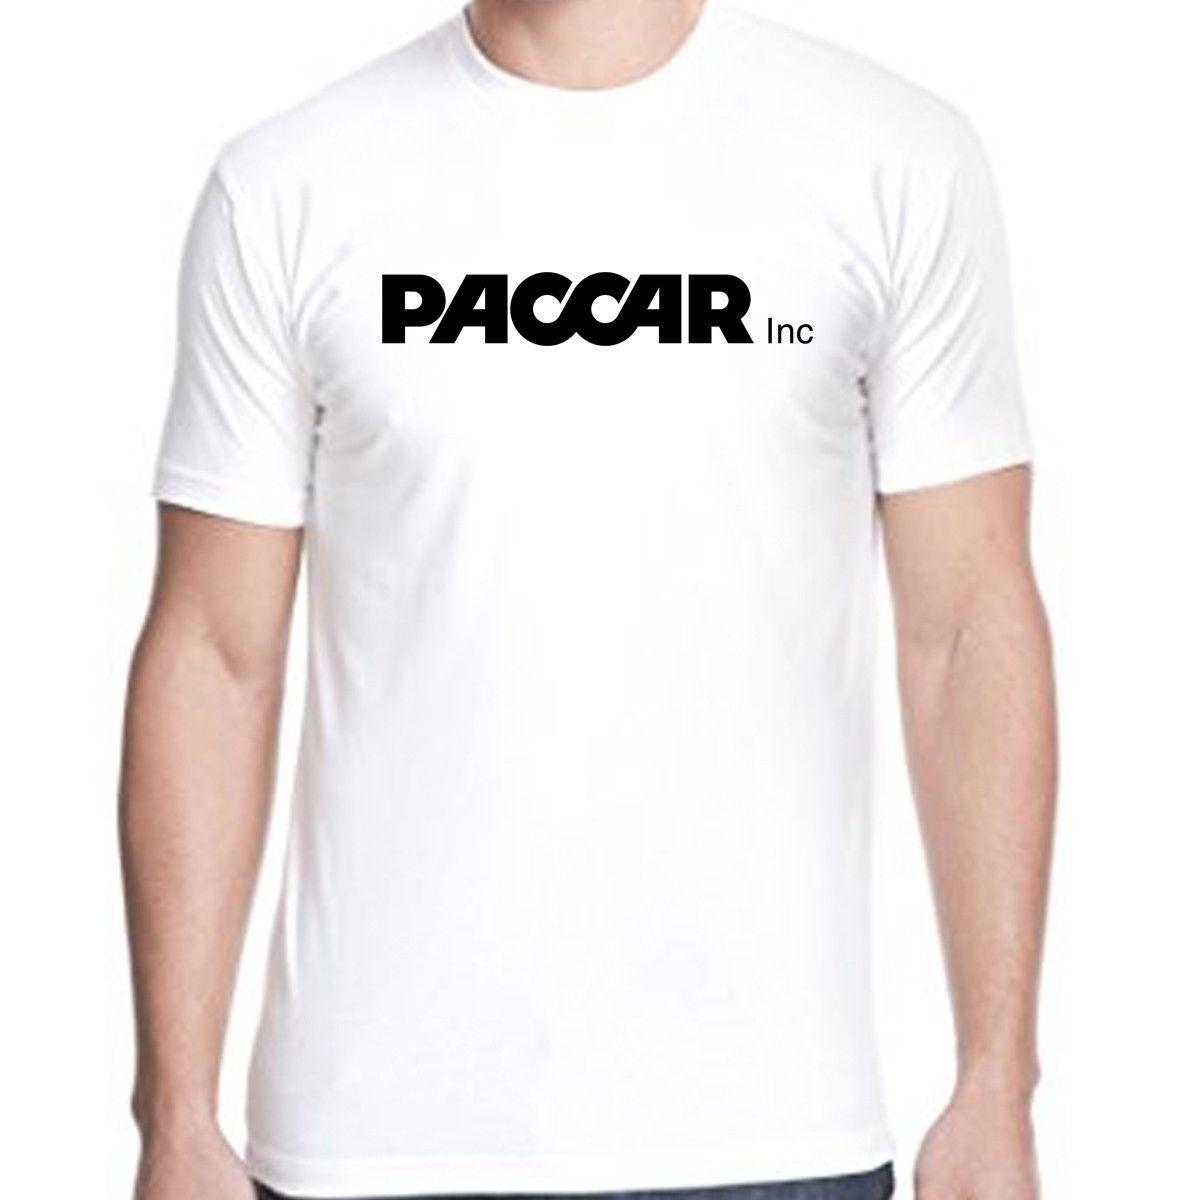 PACCAR Logo - NEW PACCAR LOGO COOL Men White T Shirt 100% Cotton Graphic Tee Short ...